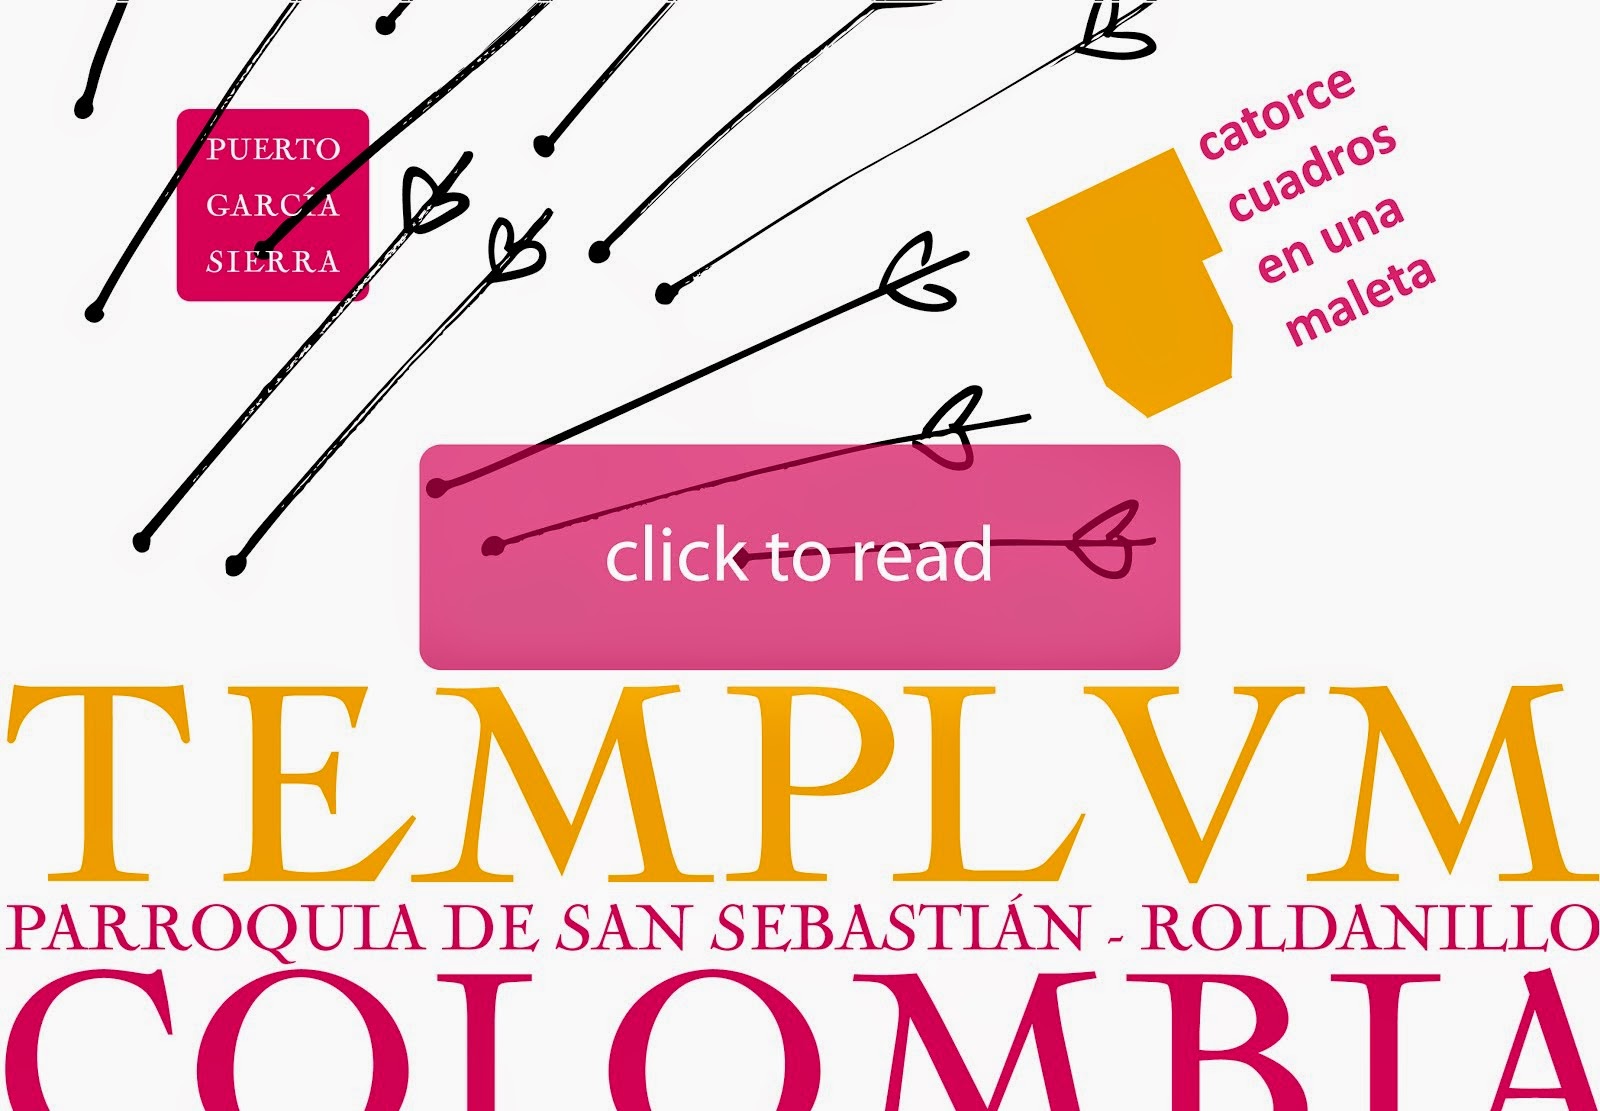 Revista Templvm Roldanillo Colombia